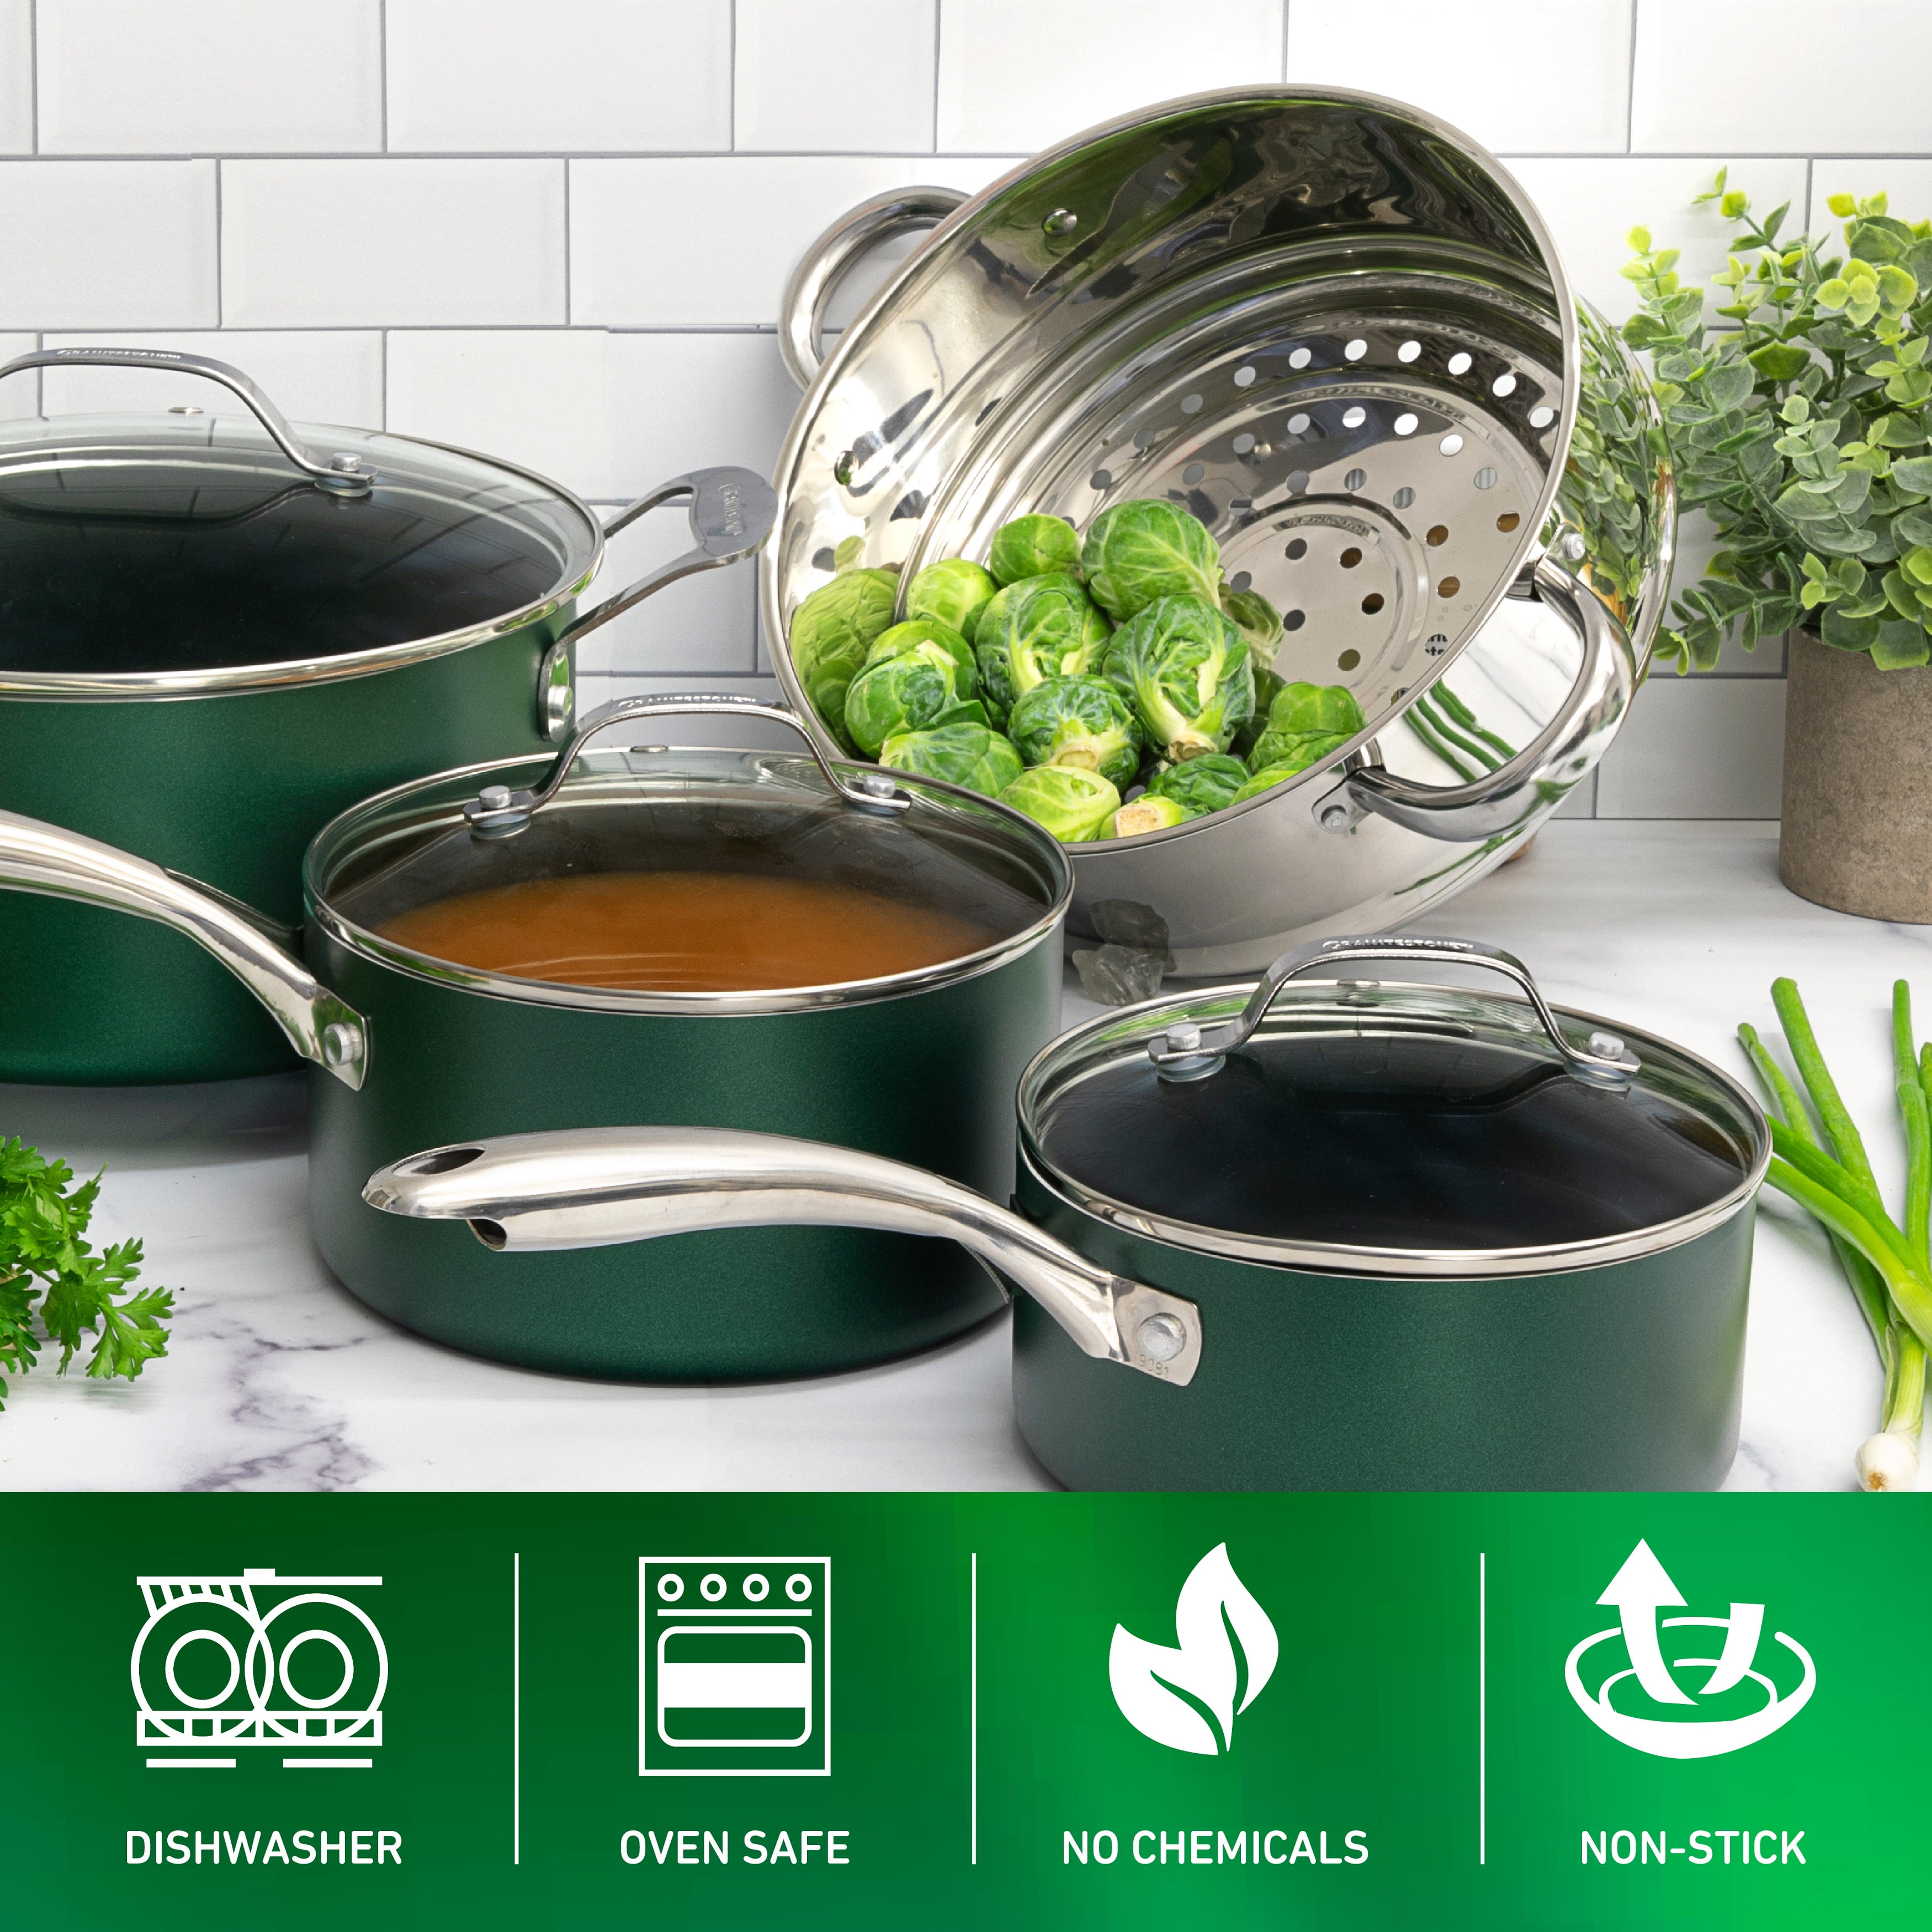 GraniteStone Emerald Nonstick Pots and Pans Cookware Set - 5 Piece -  20373034